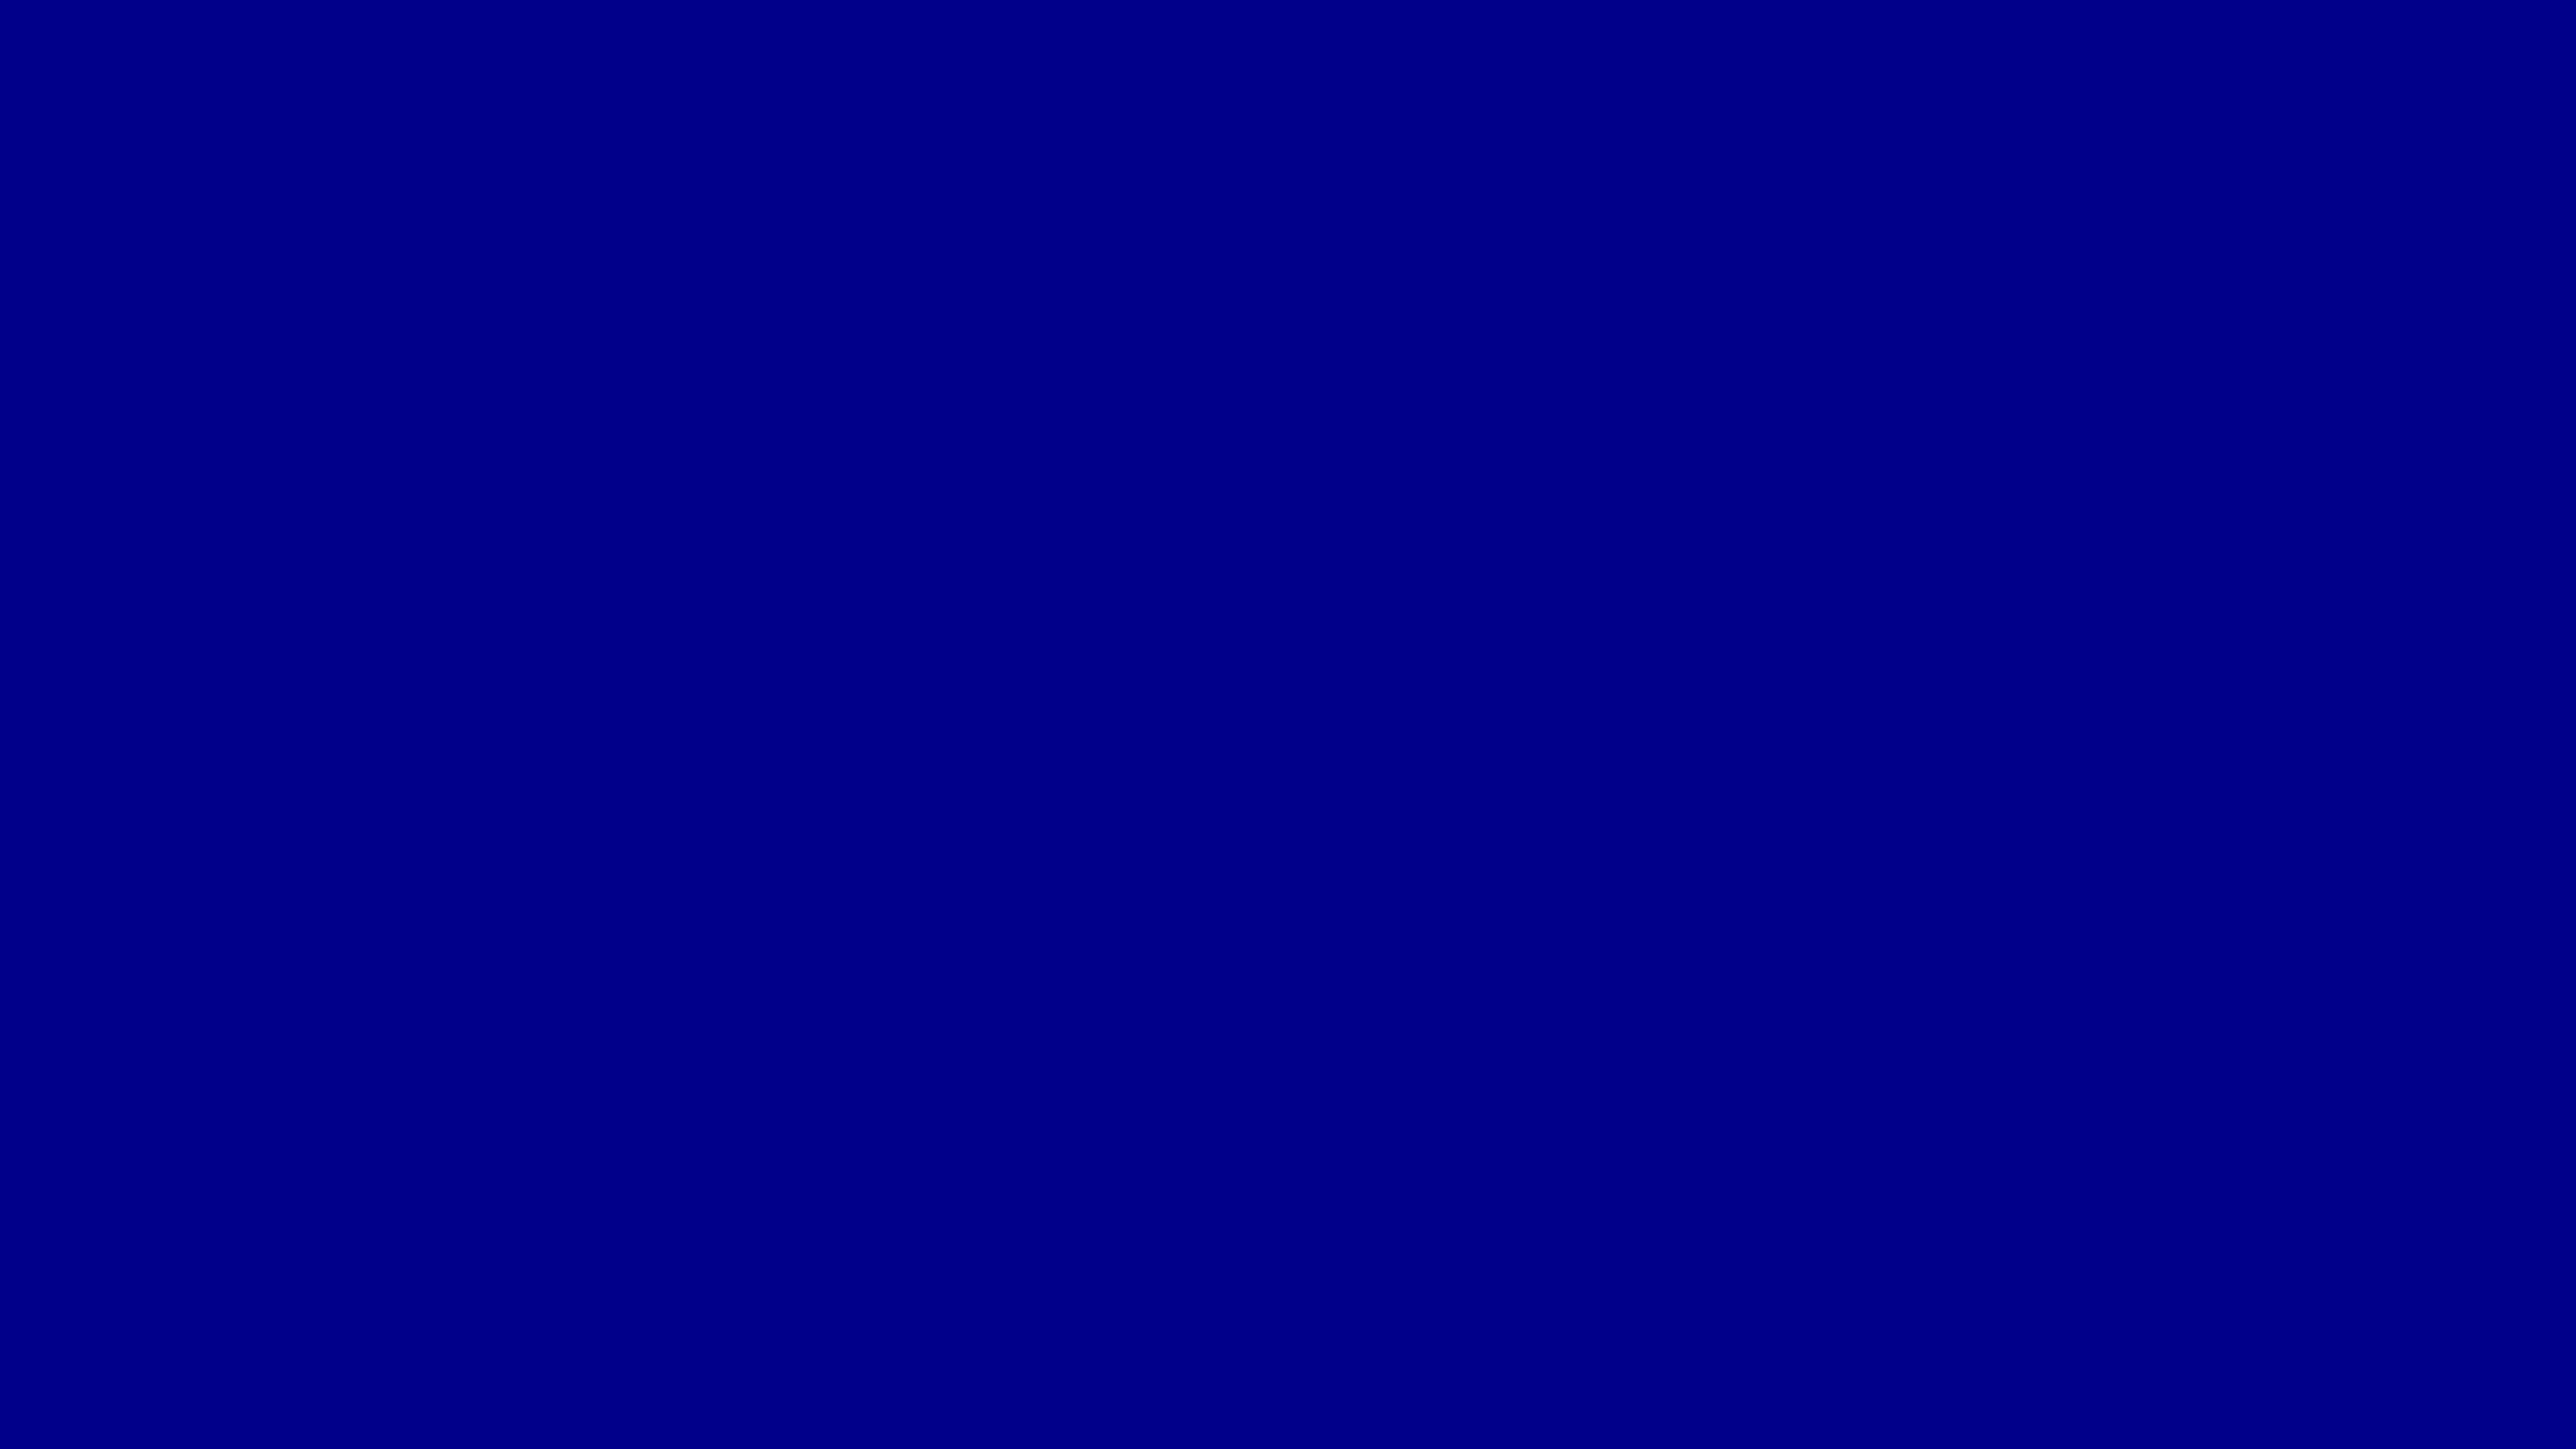 dark and light blue background